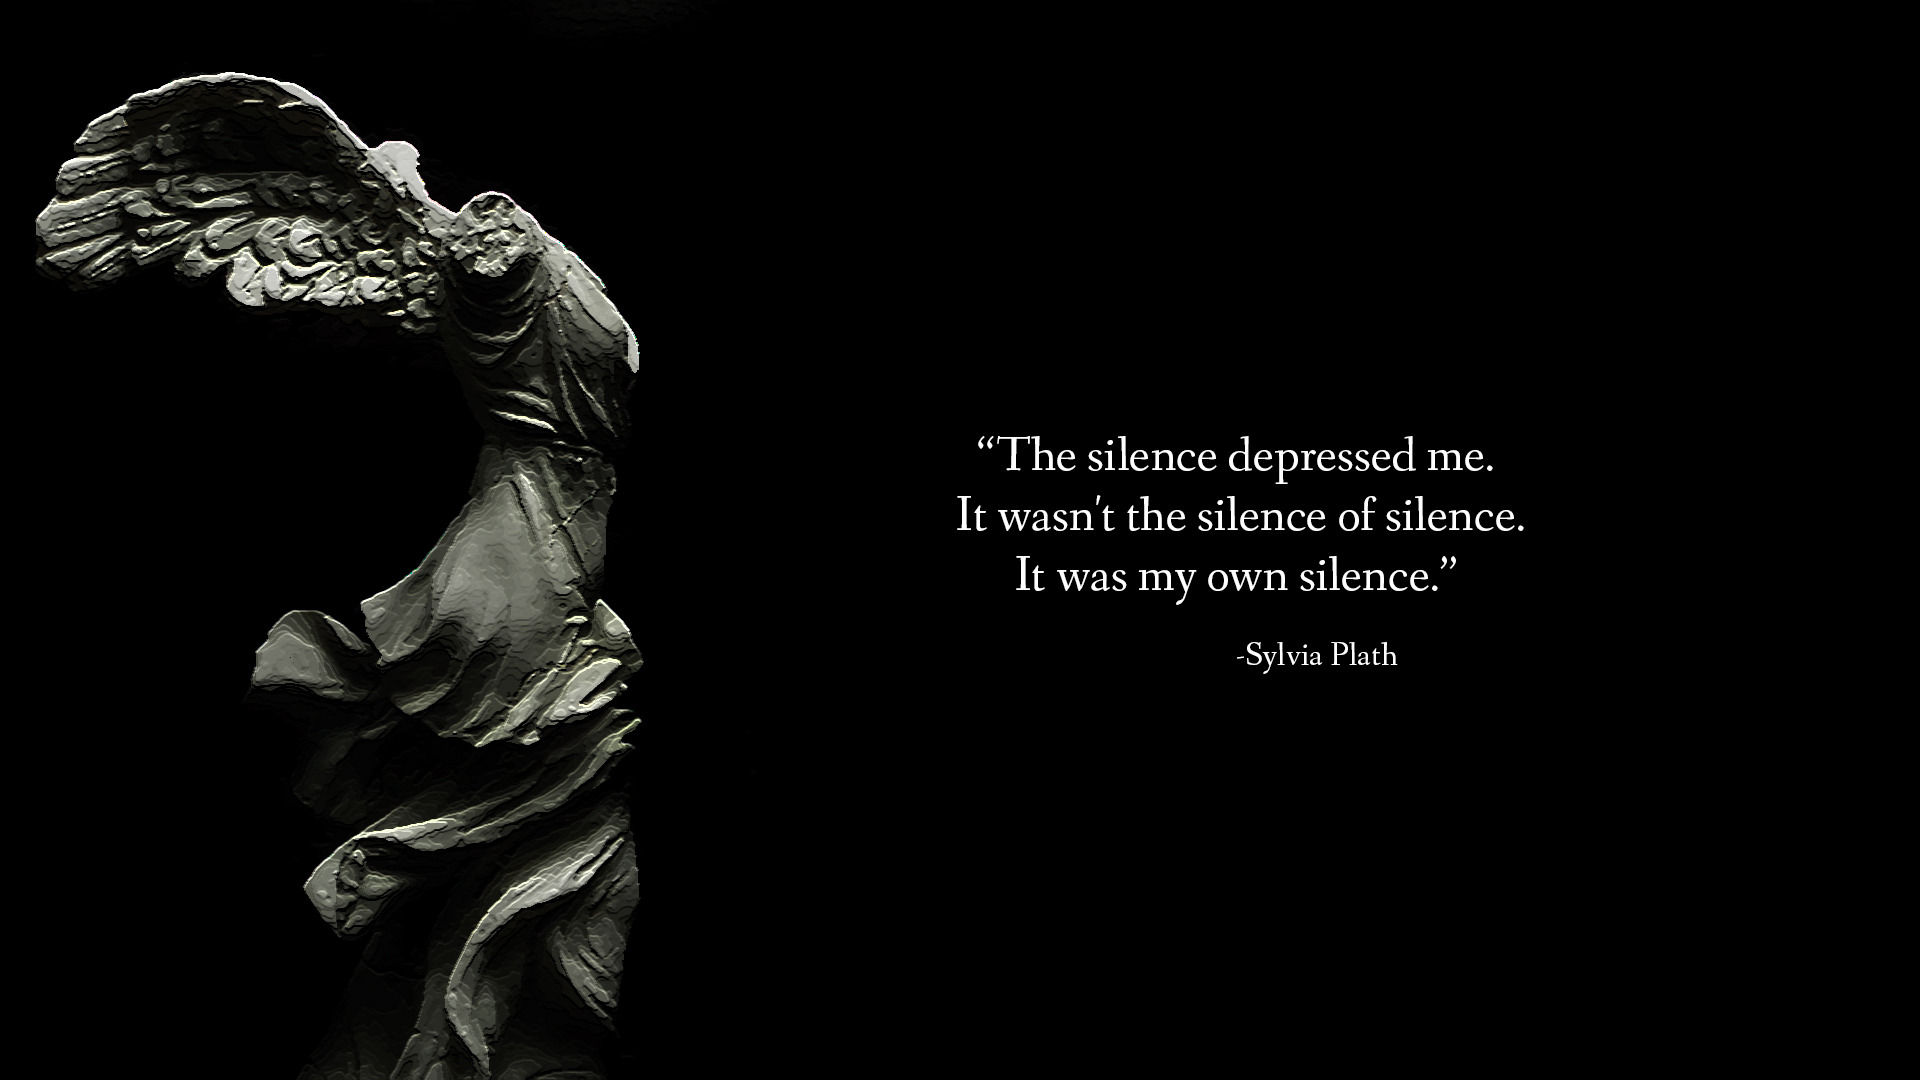 sylvia plath on depression quote hd wallpaper 1920x1080 9801 1920x1080